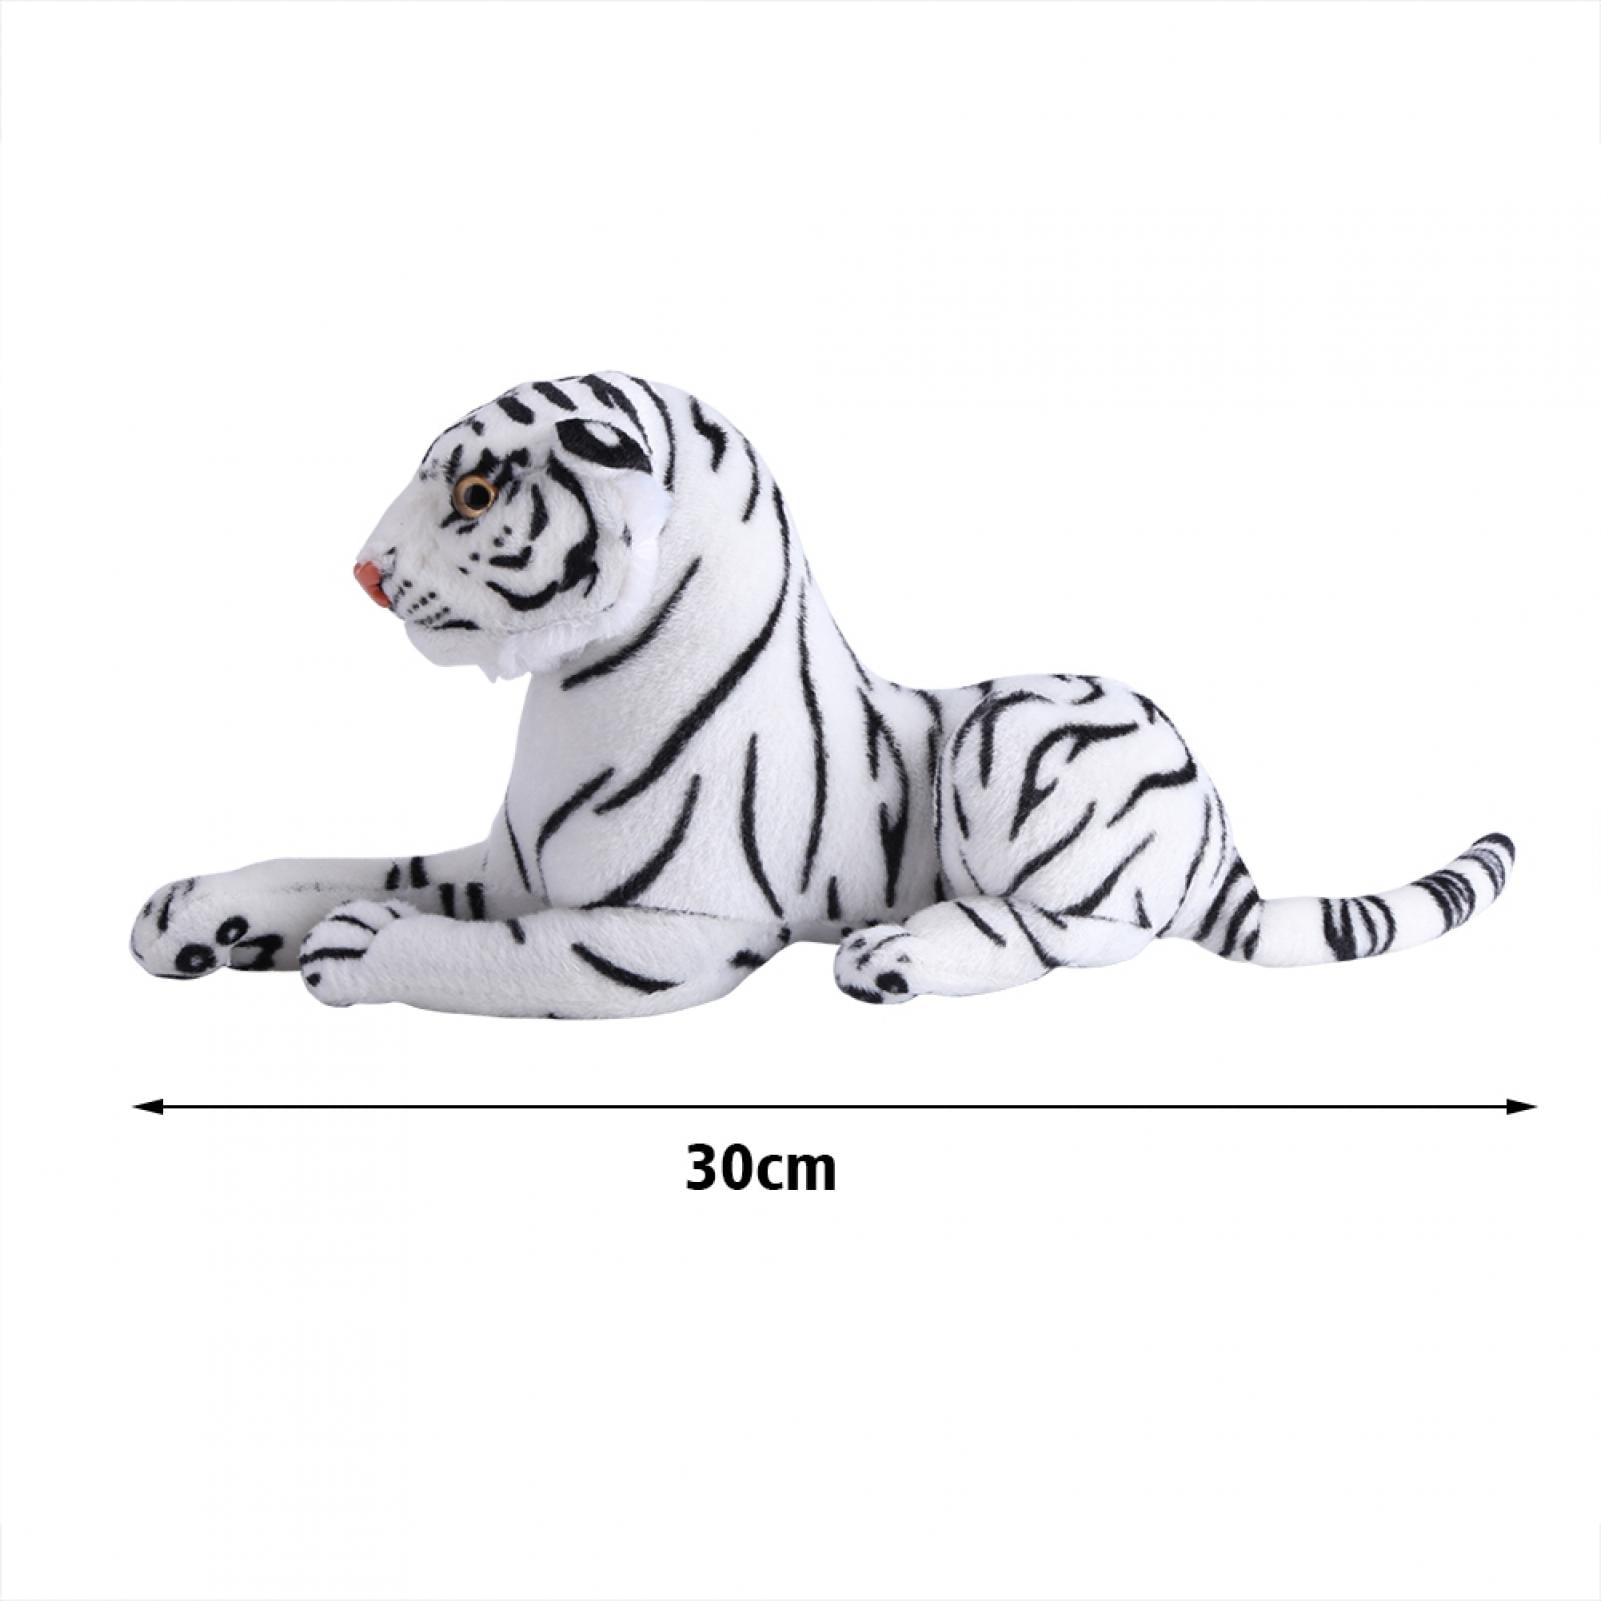 10" BRUBAKER Cute White Plush Tiger Stuffed Animal Soft Toy 